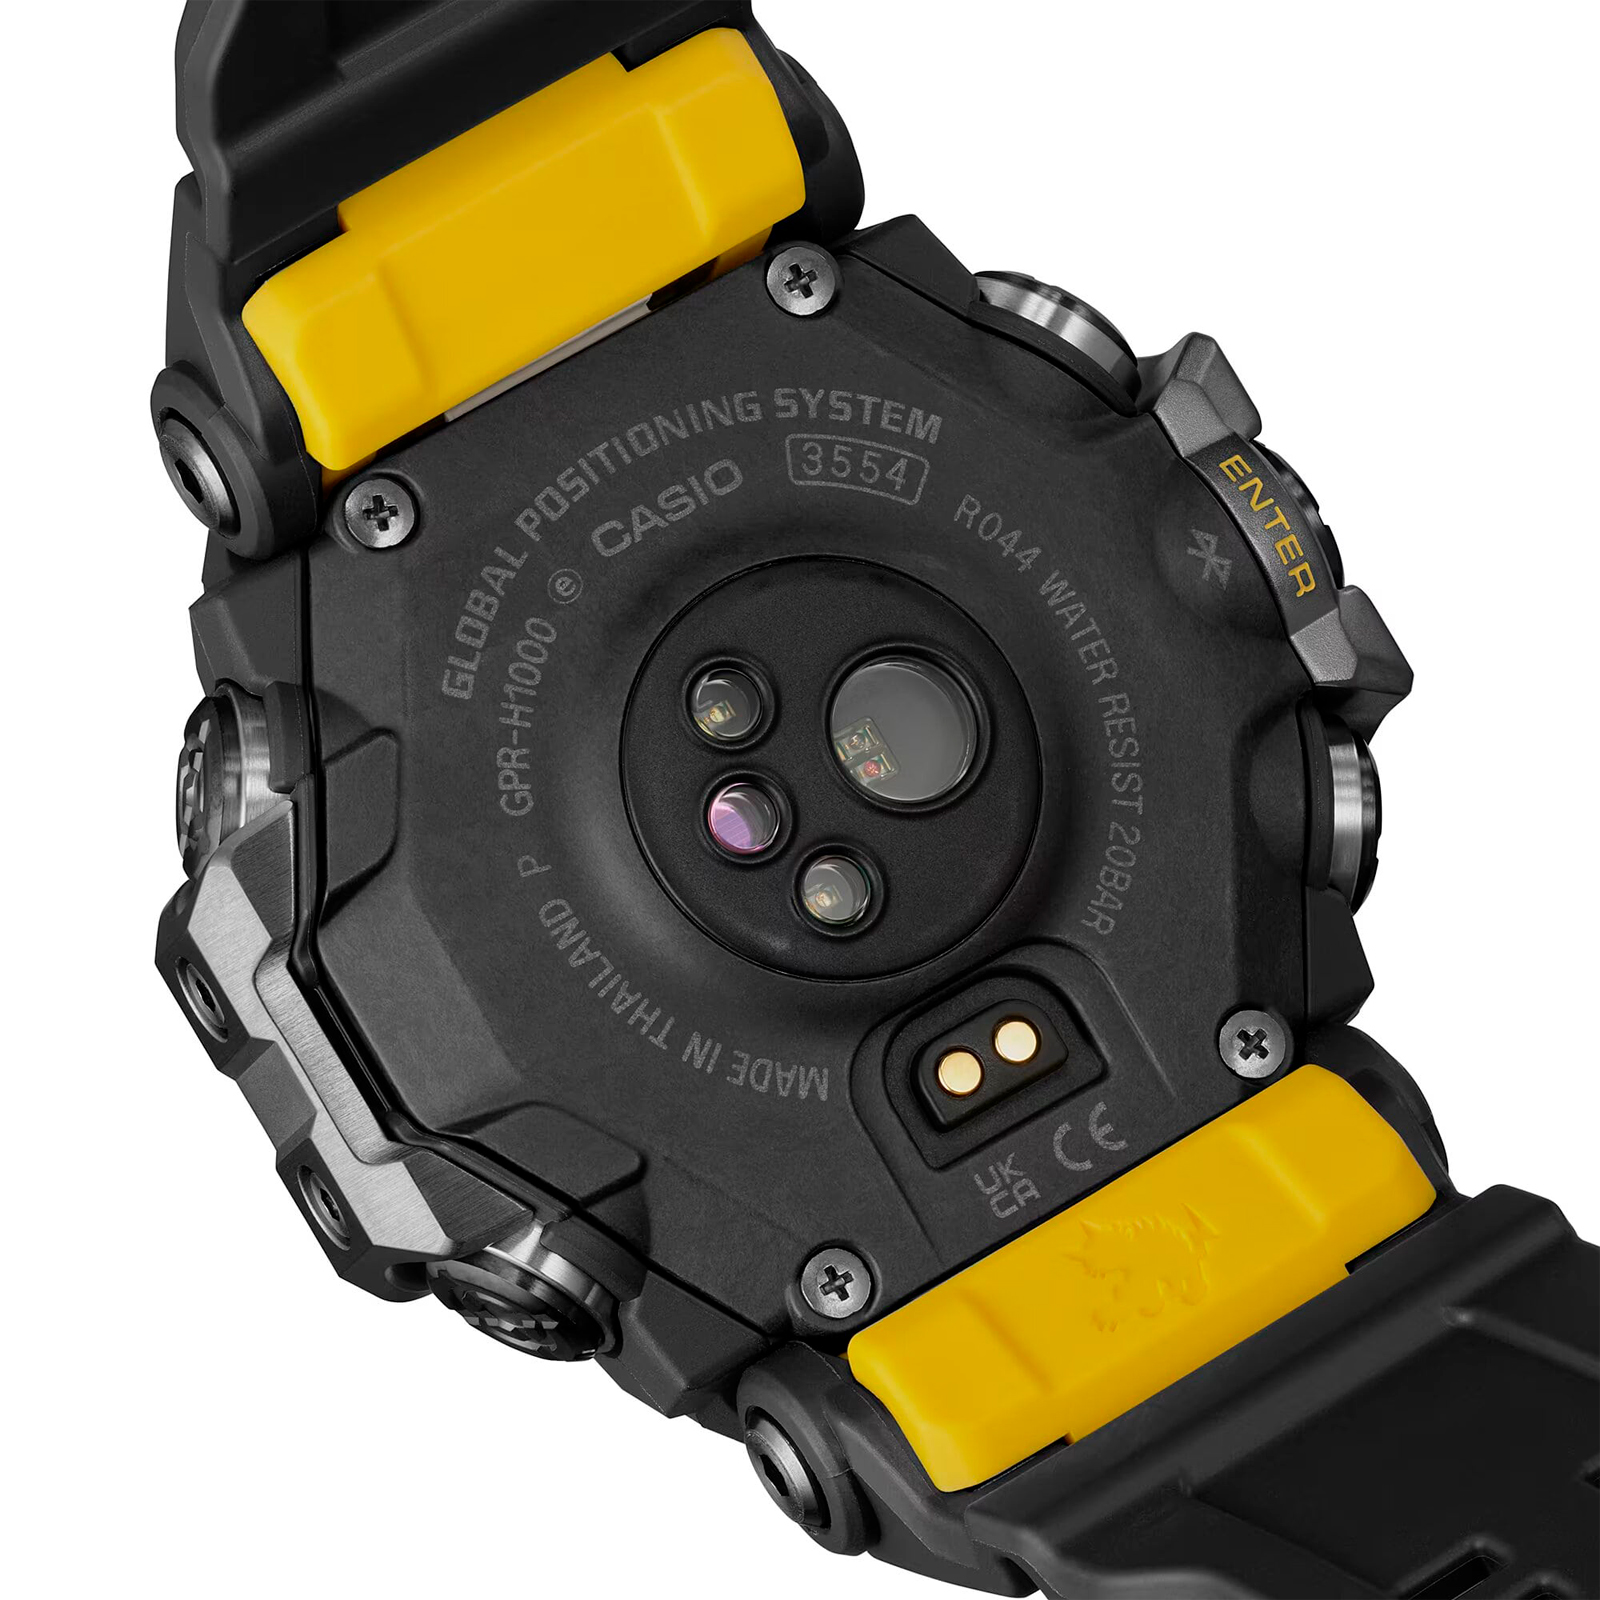 Reloj G-SHOCK GPR-H1000-1D Resina Hombre Negro